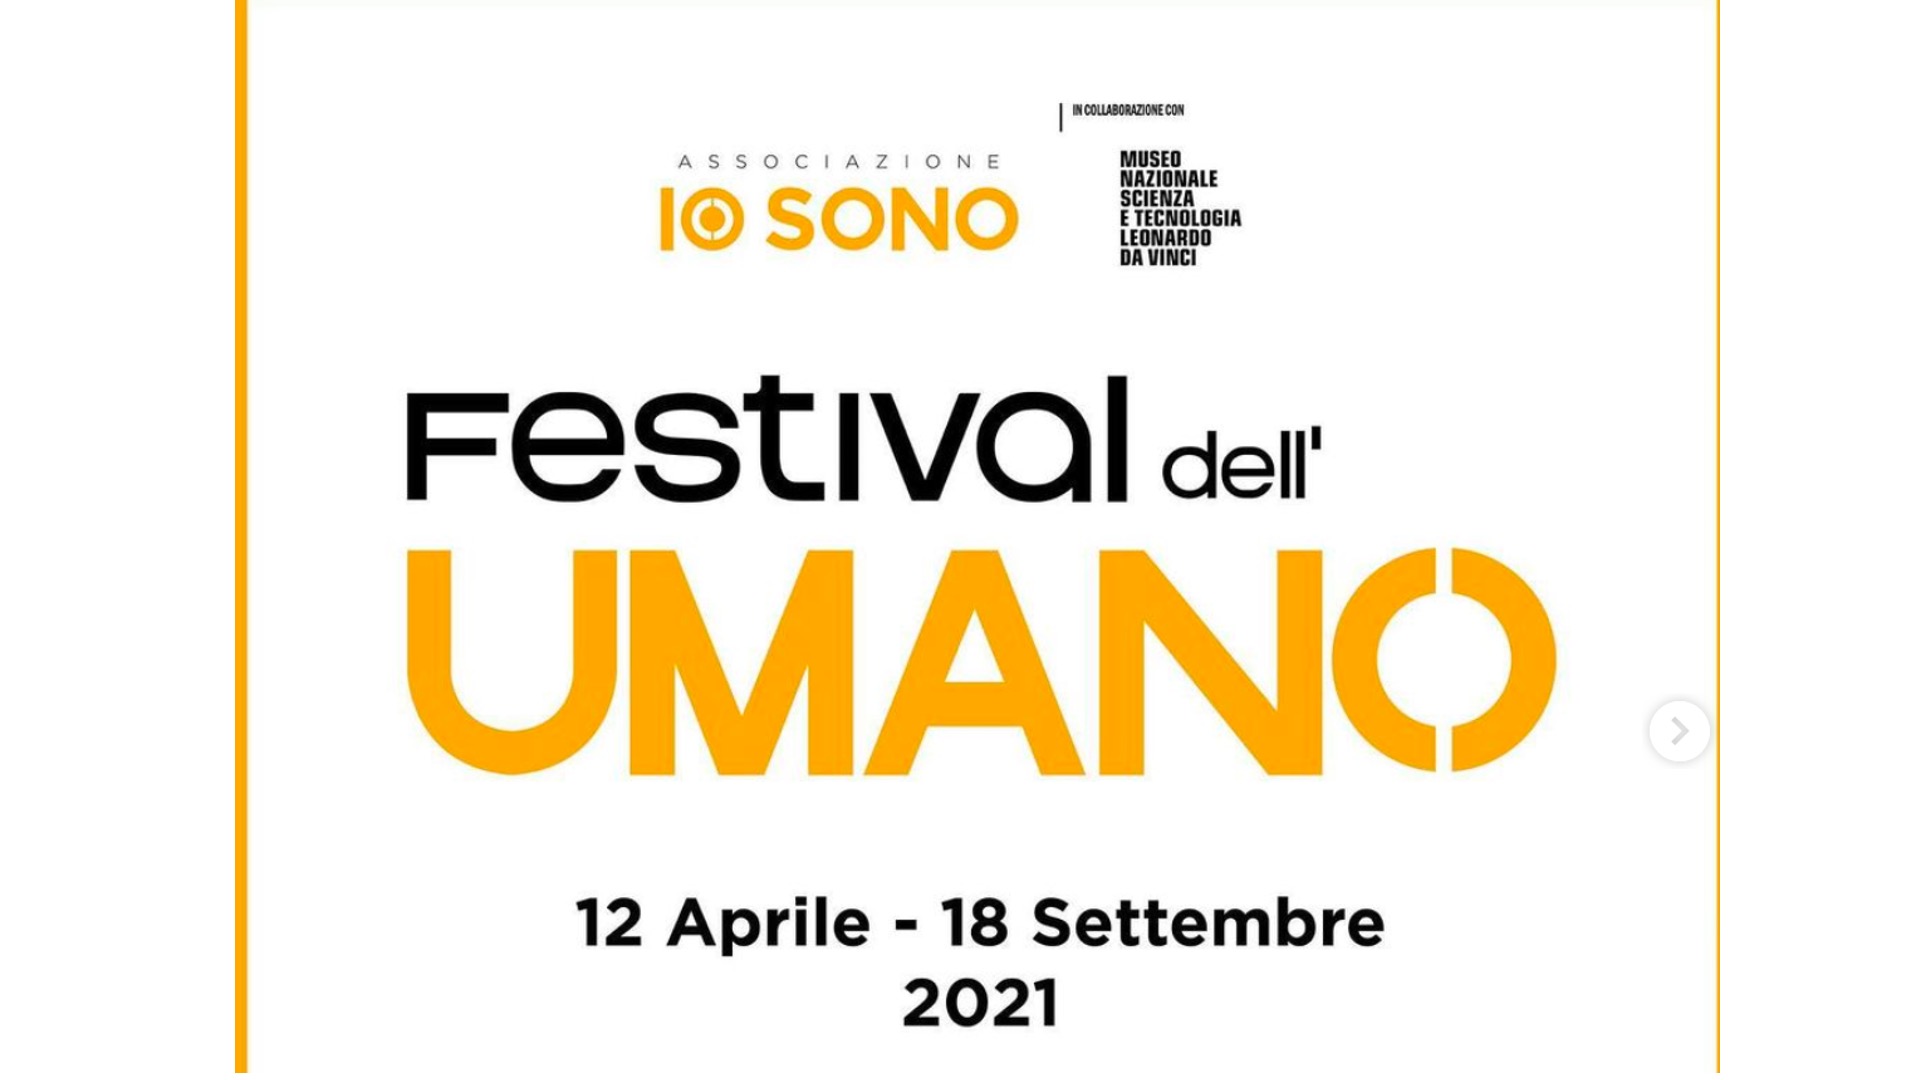 Next at Festival dell’Umano 2021